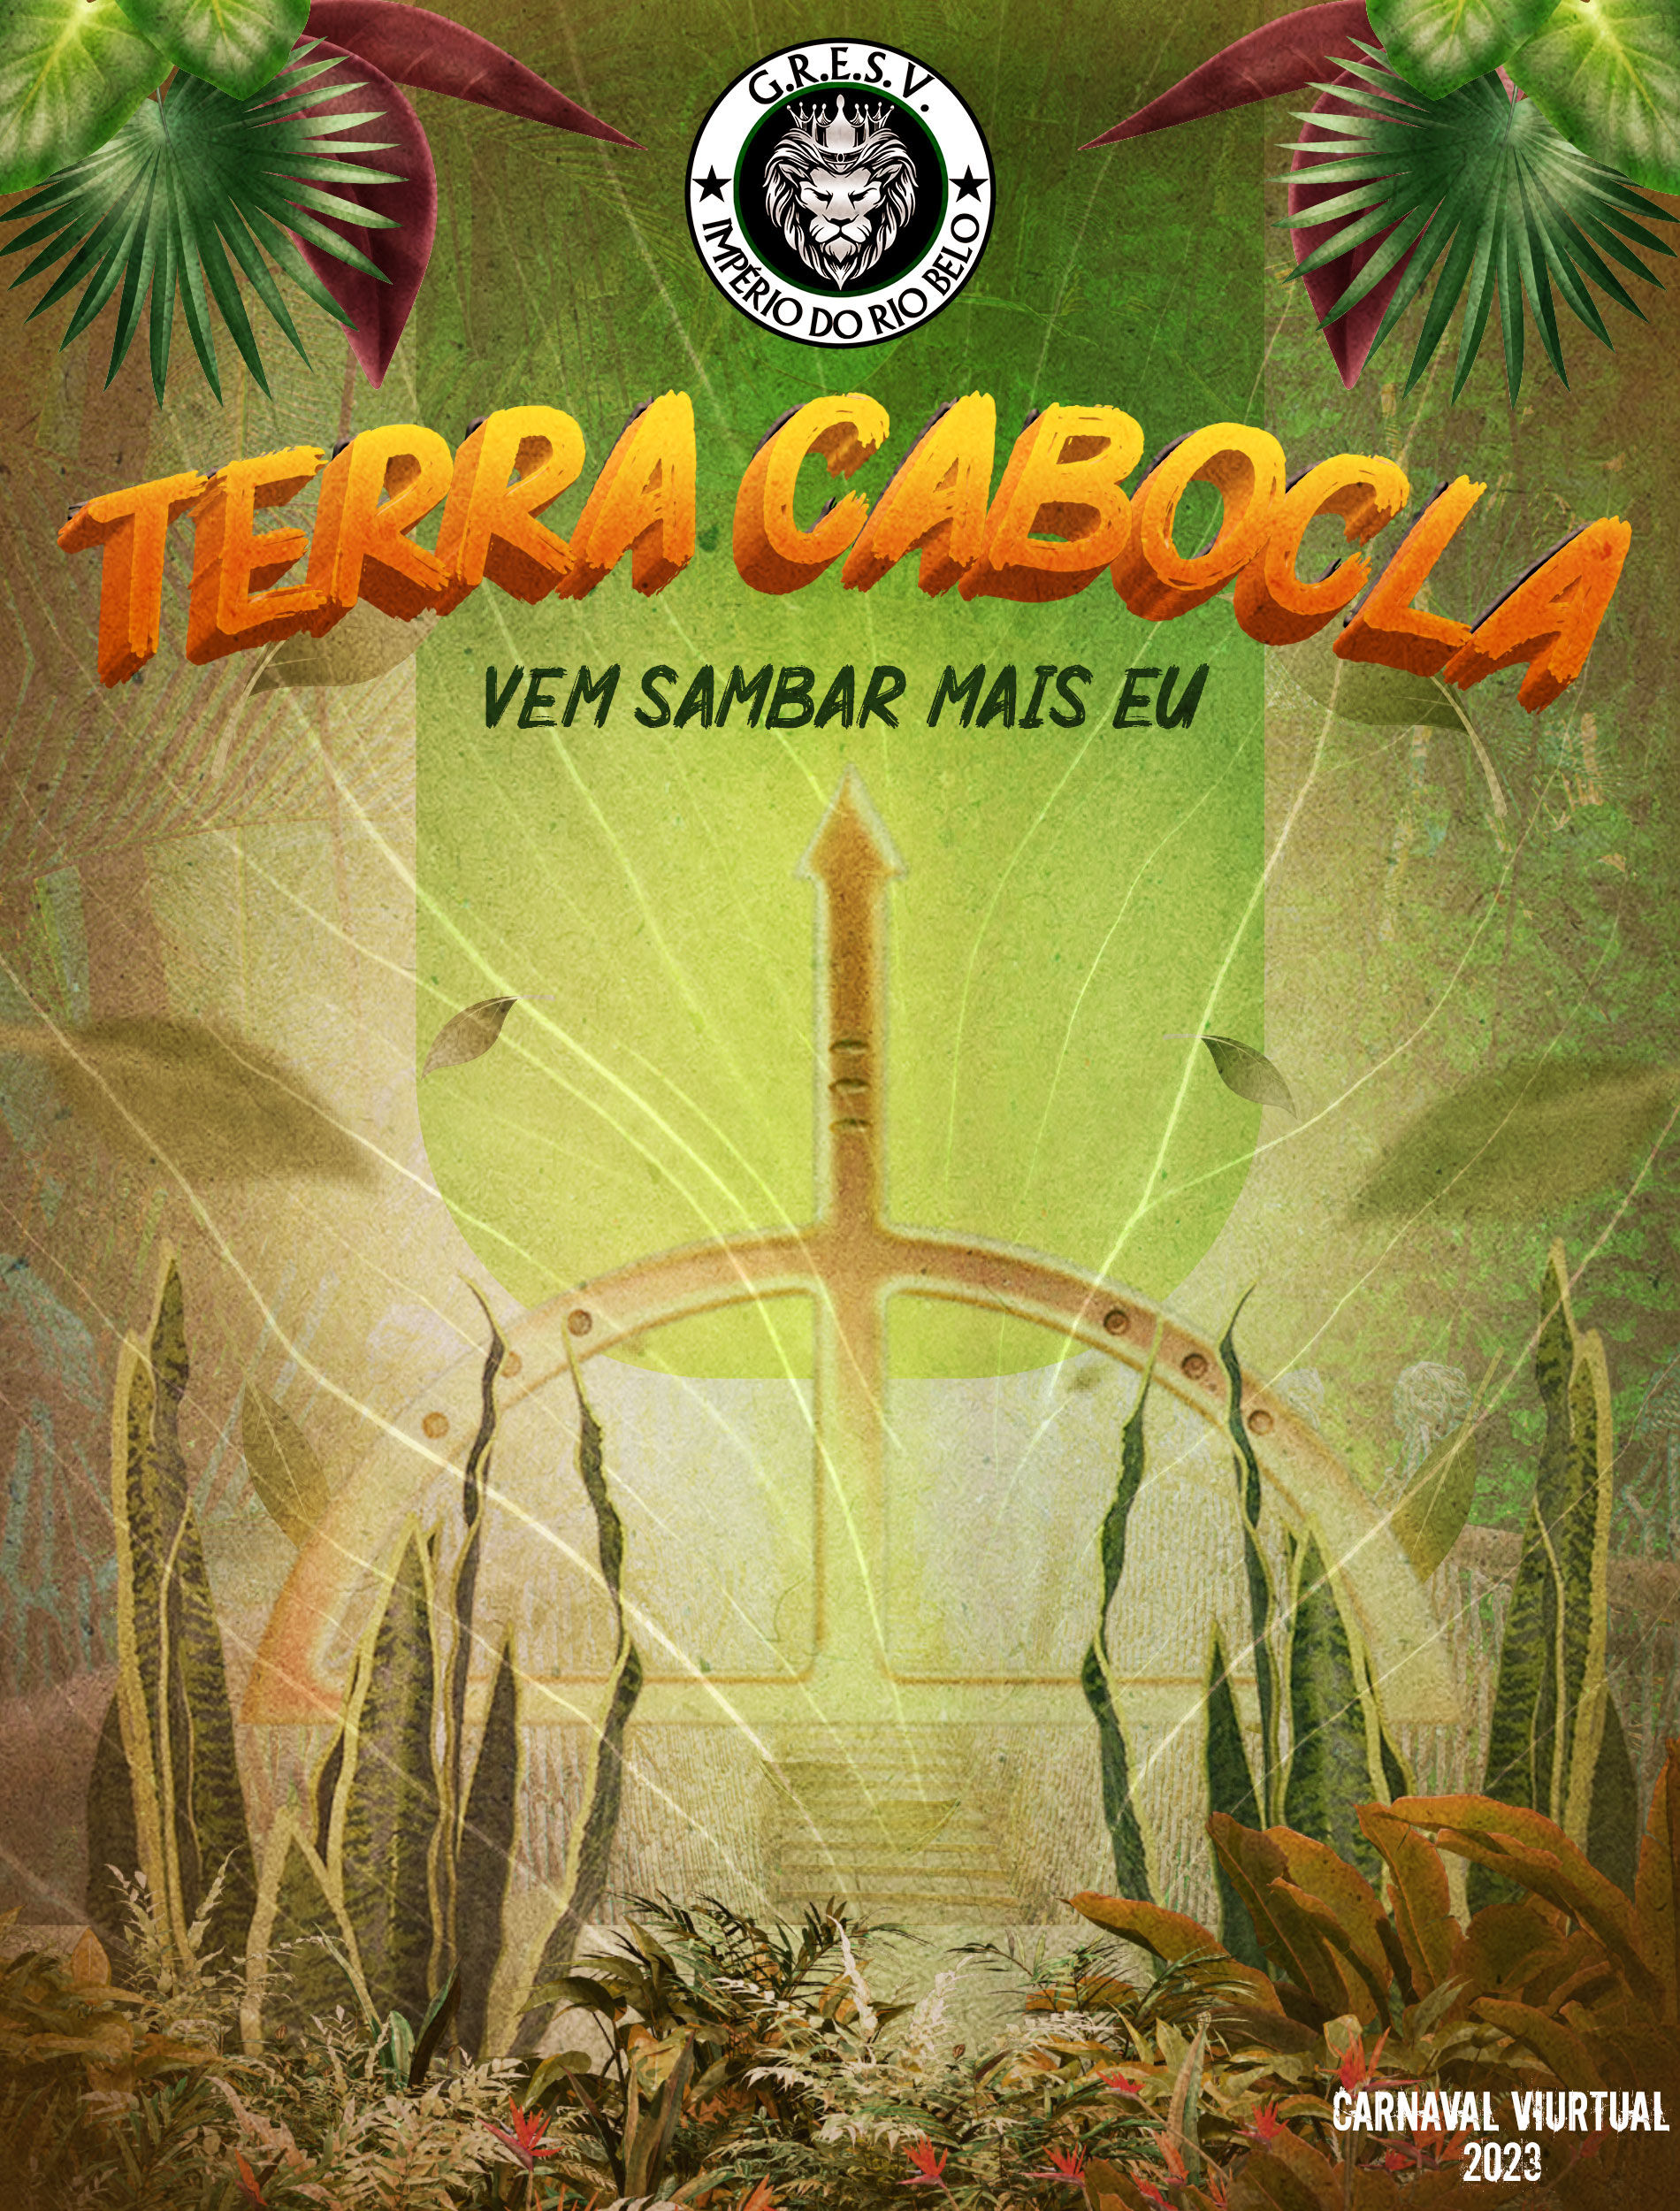 Império do Rio Belo apresentará a Terra Cabocla no Carnaval Virtual 2023